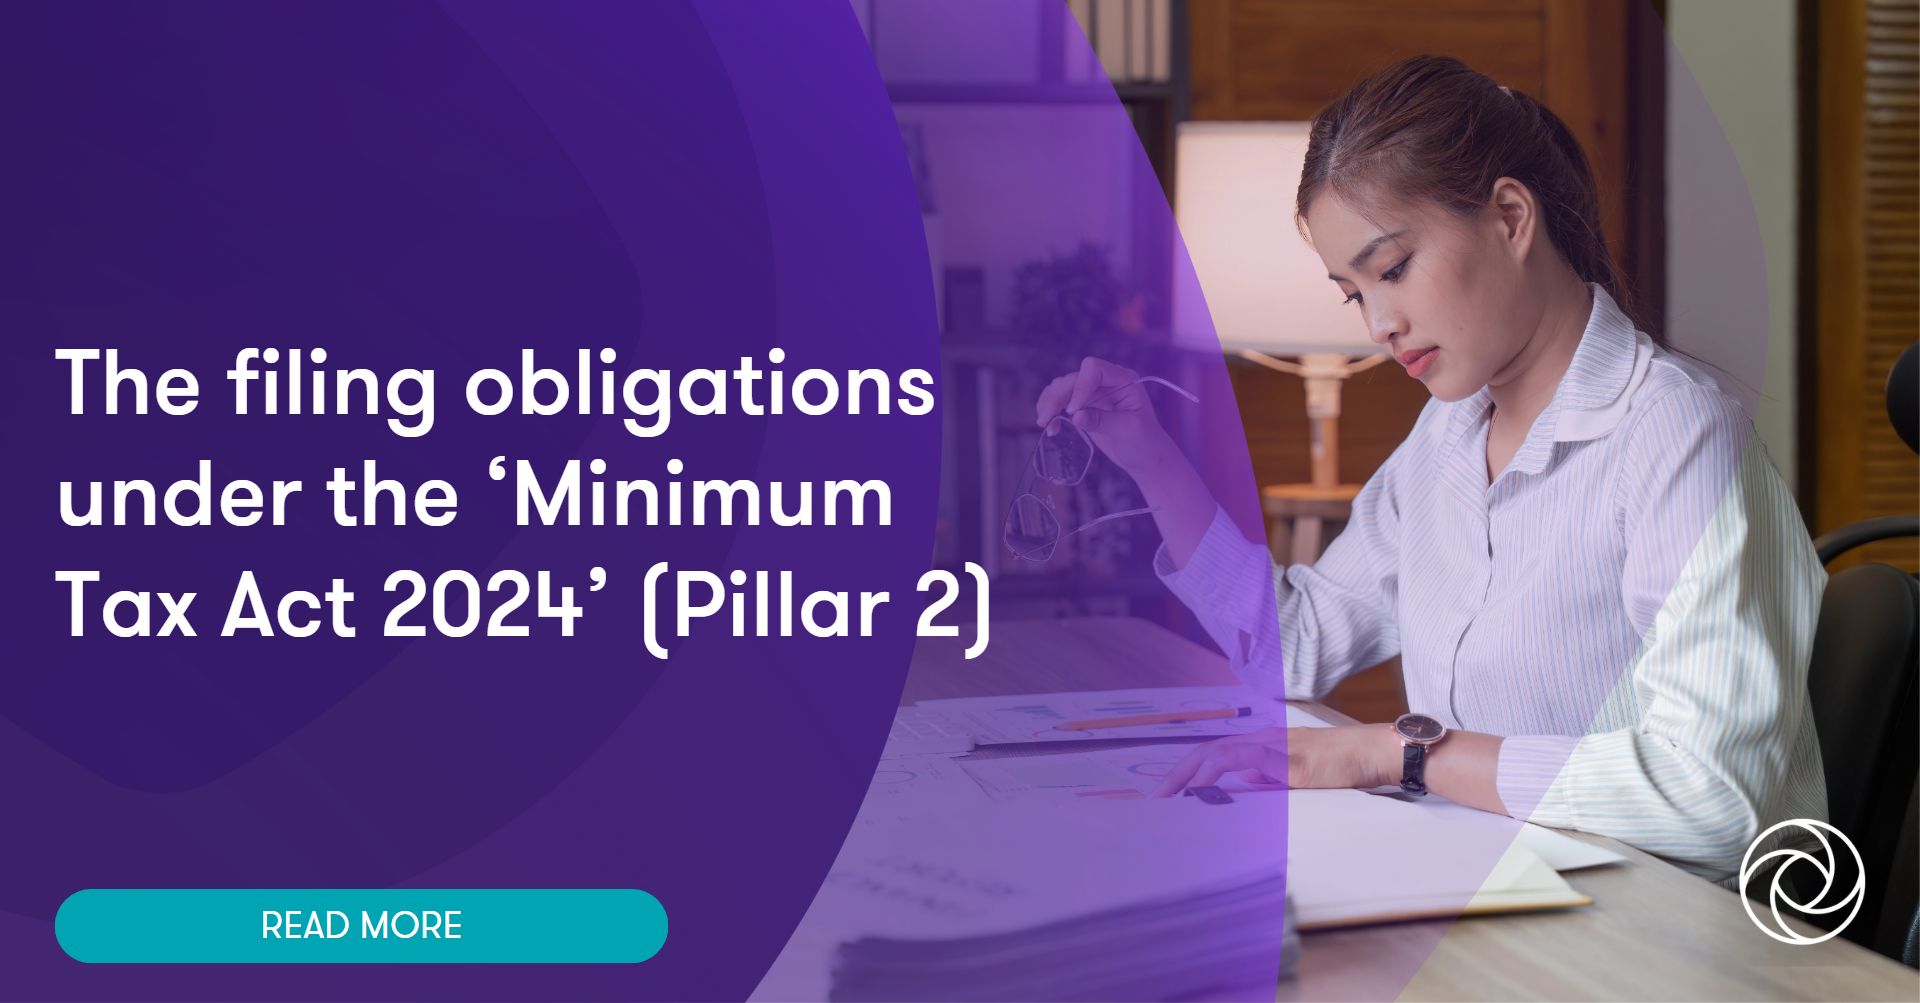 The filing obligations under the ‘Minimum Tax Act 2024’ (Pillar 2